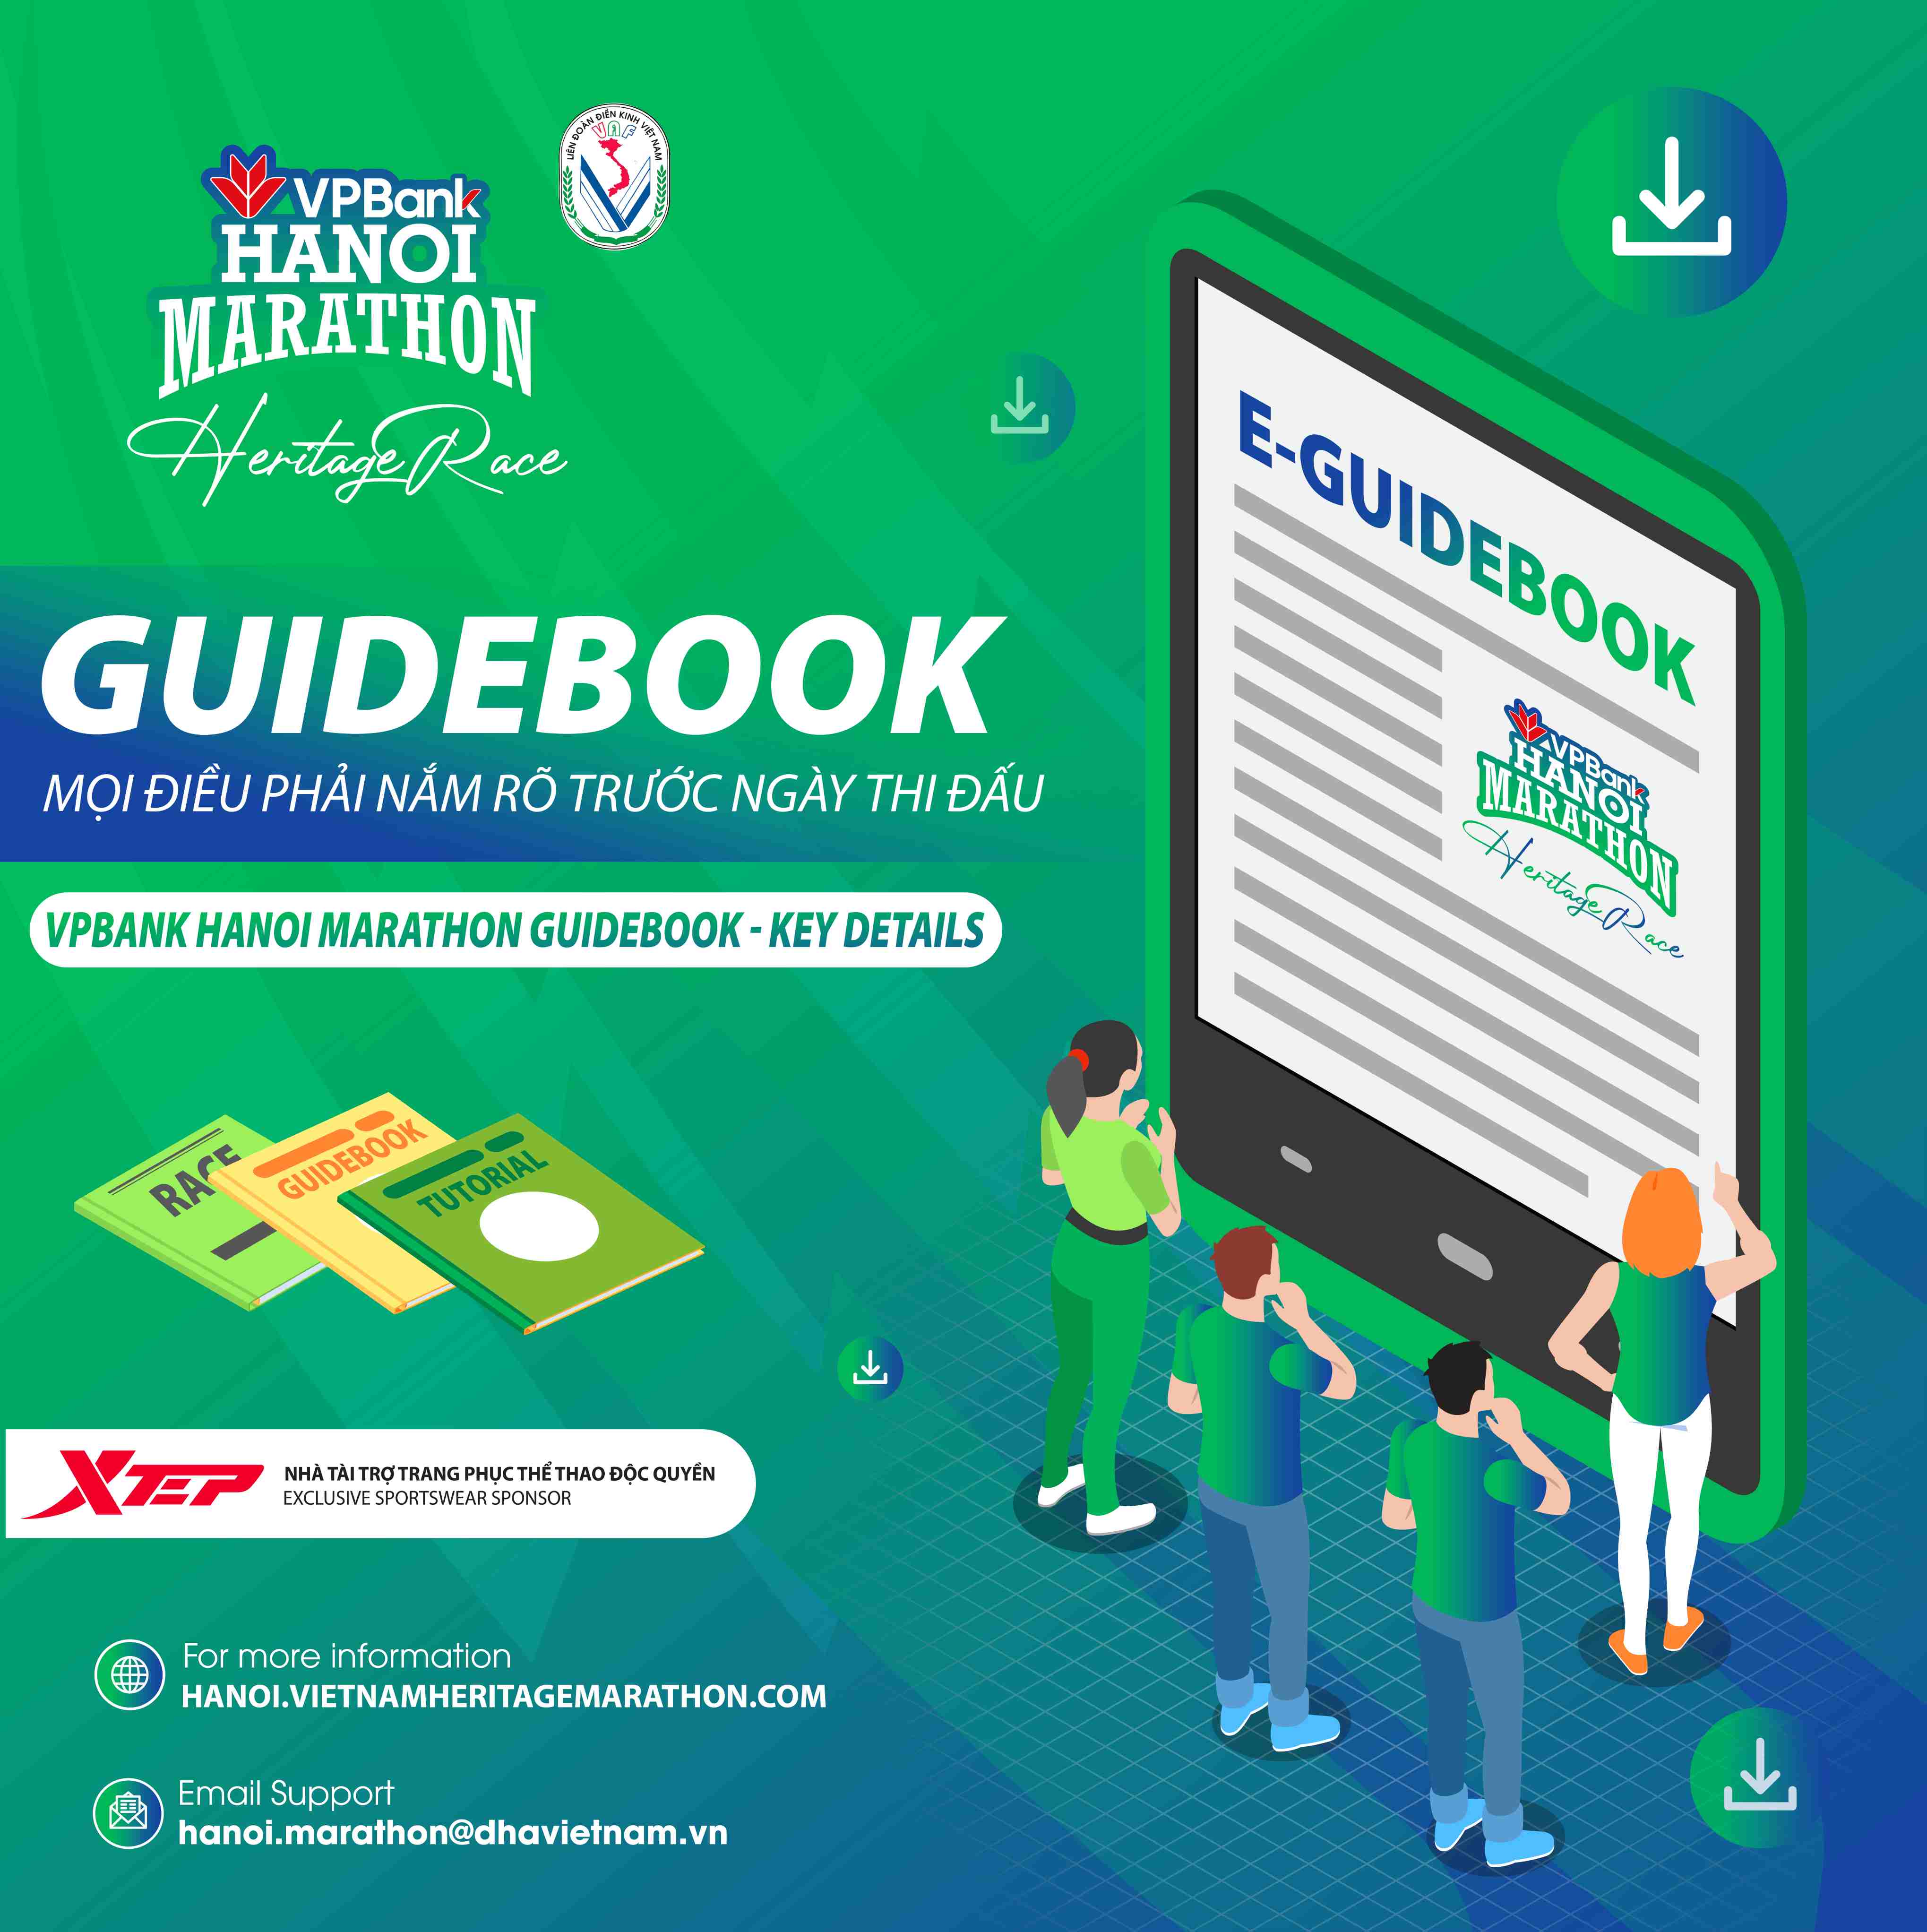 VPBank Hanoi Marathon 2021 Publishes Guidebook For Runners